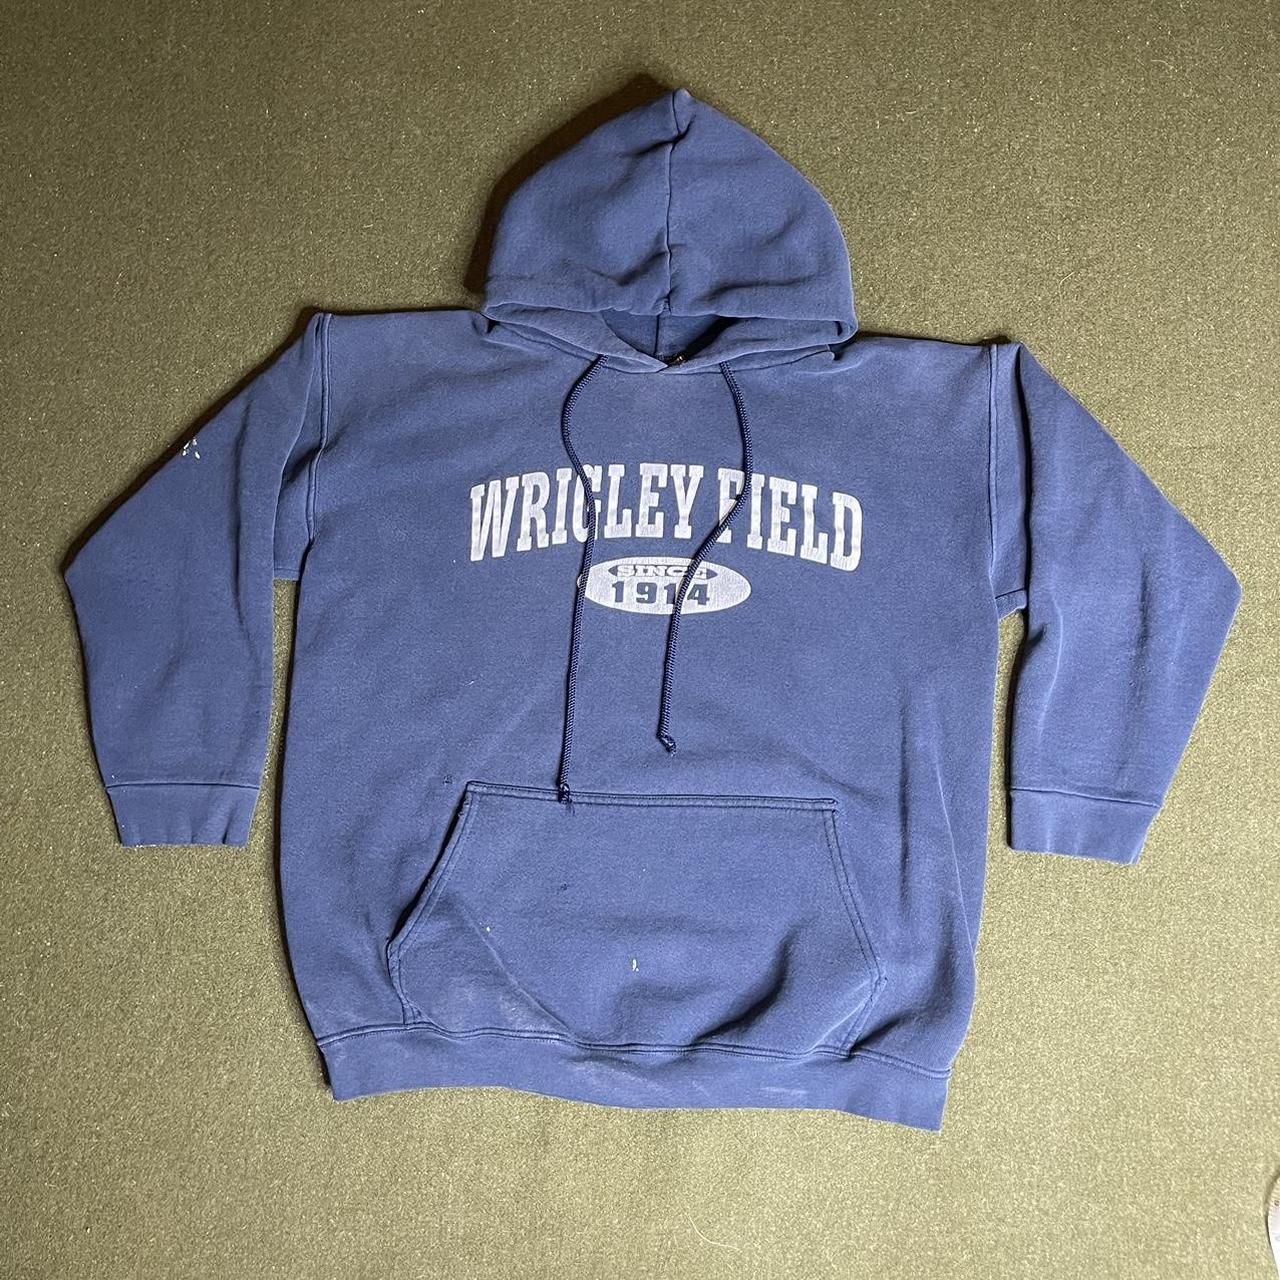 Vintage Wrigley Field hoodie size medium. Aged and